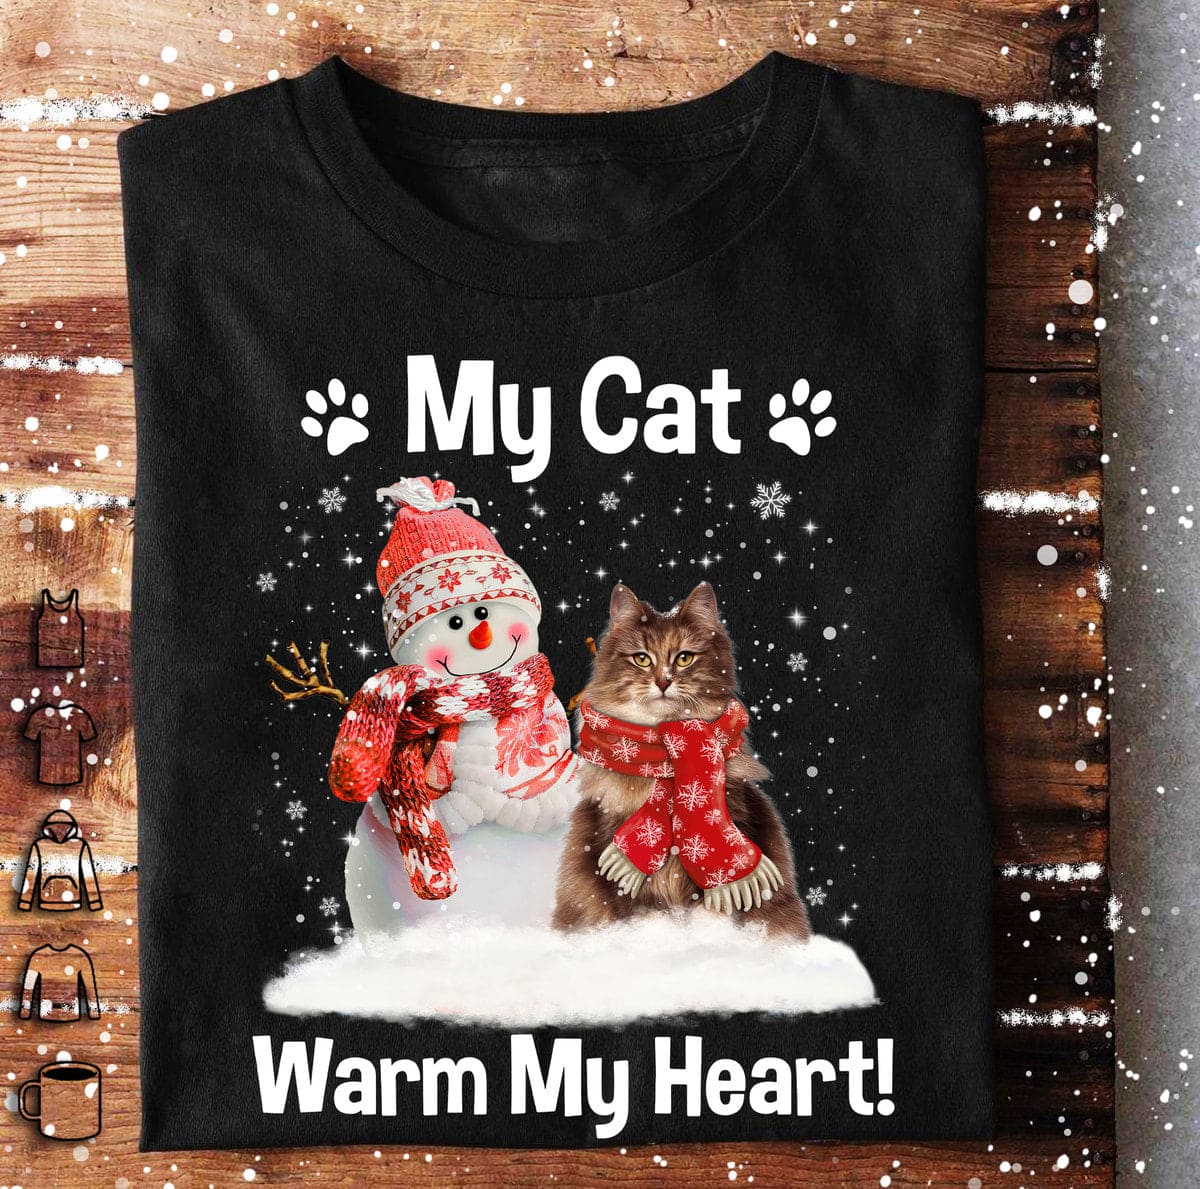 My cat warm my heart - Christmas snowman, cat and snowman, Merry Christmas T-shirt